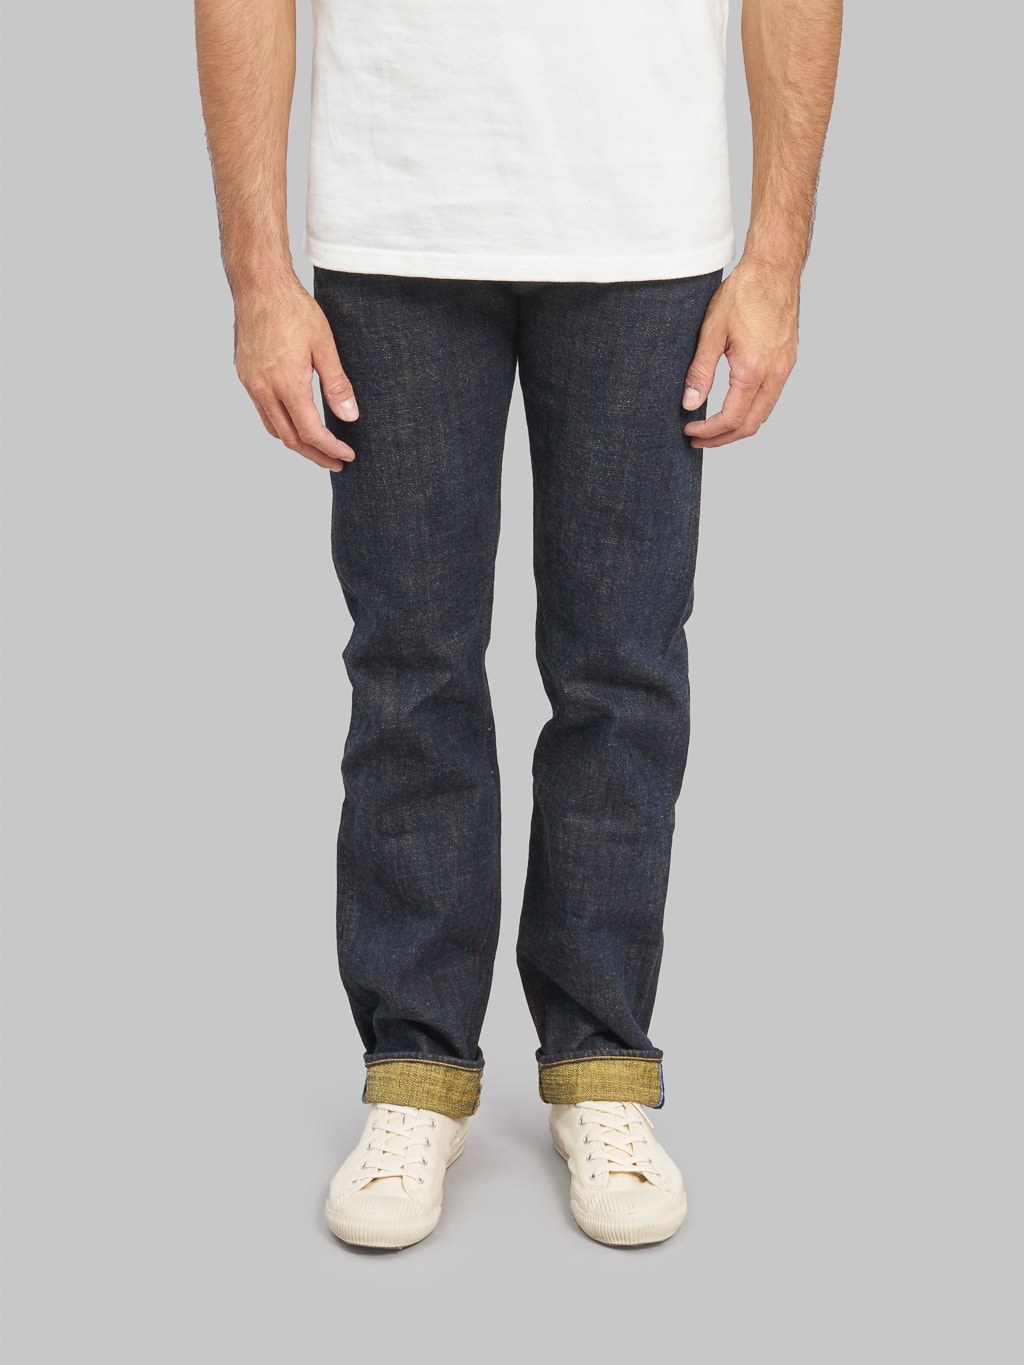 Tanuki "Soga" 15oz Regular Straight Jeans